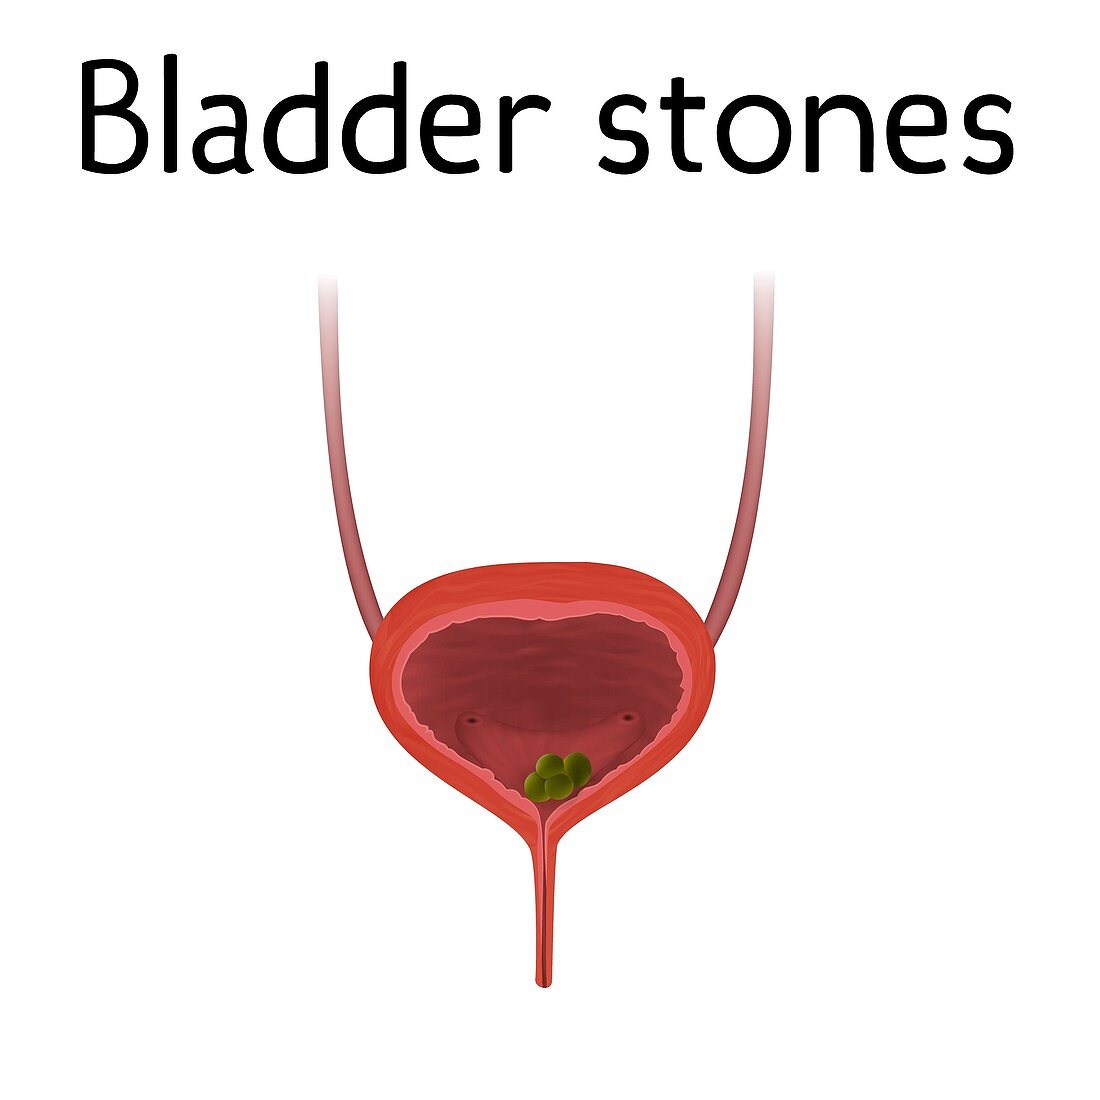 Bladder stones, illustration